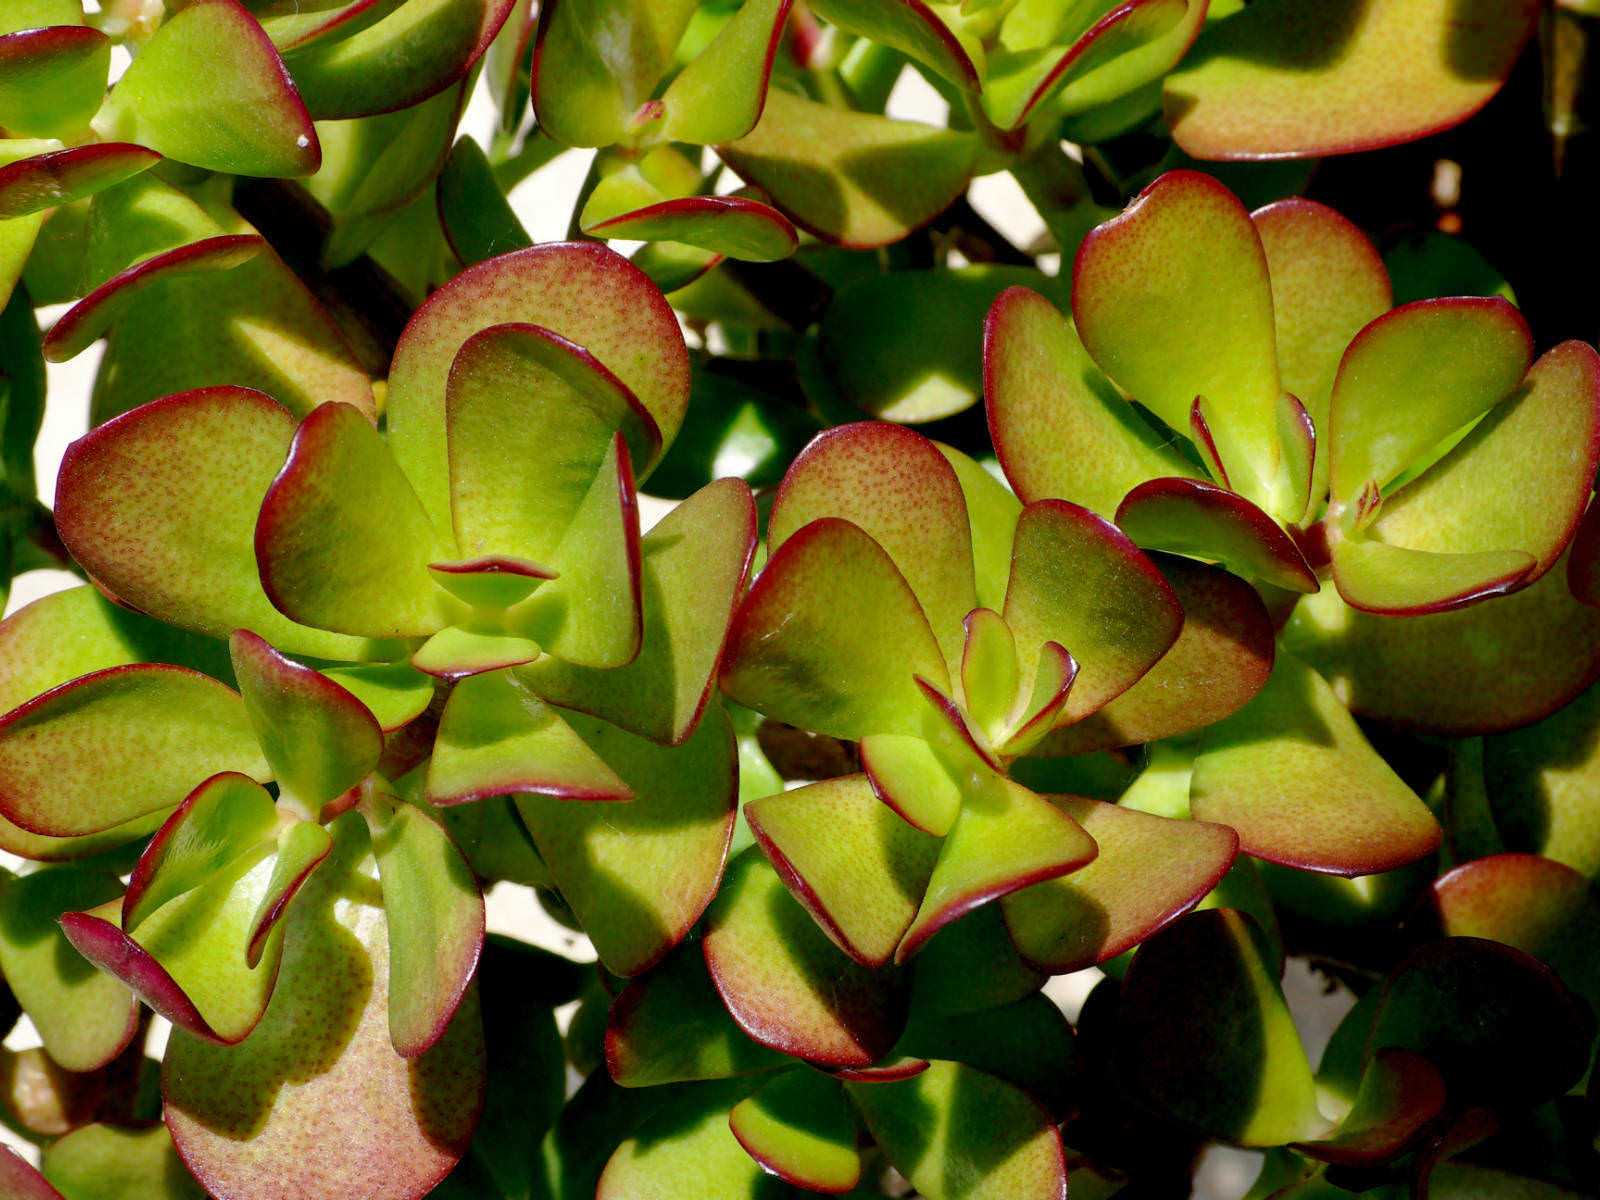 crassula ovata jade plant tree money care leaves grow succulents planta plants pretty than just lucky suculenta worldofsucculents jad arborele